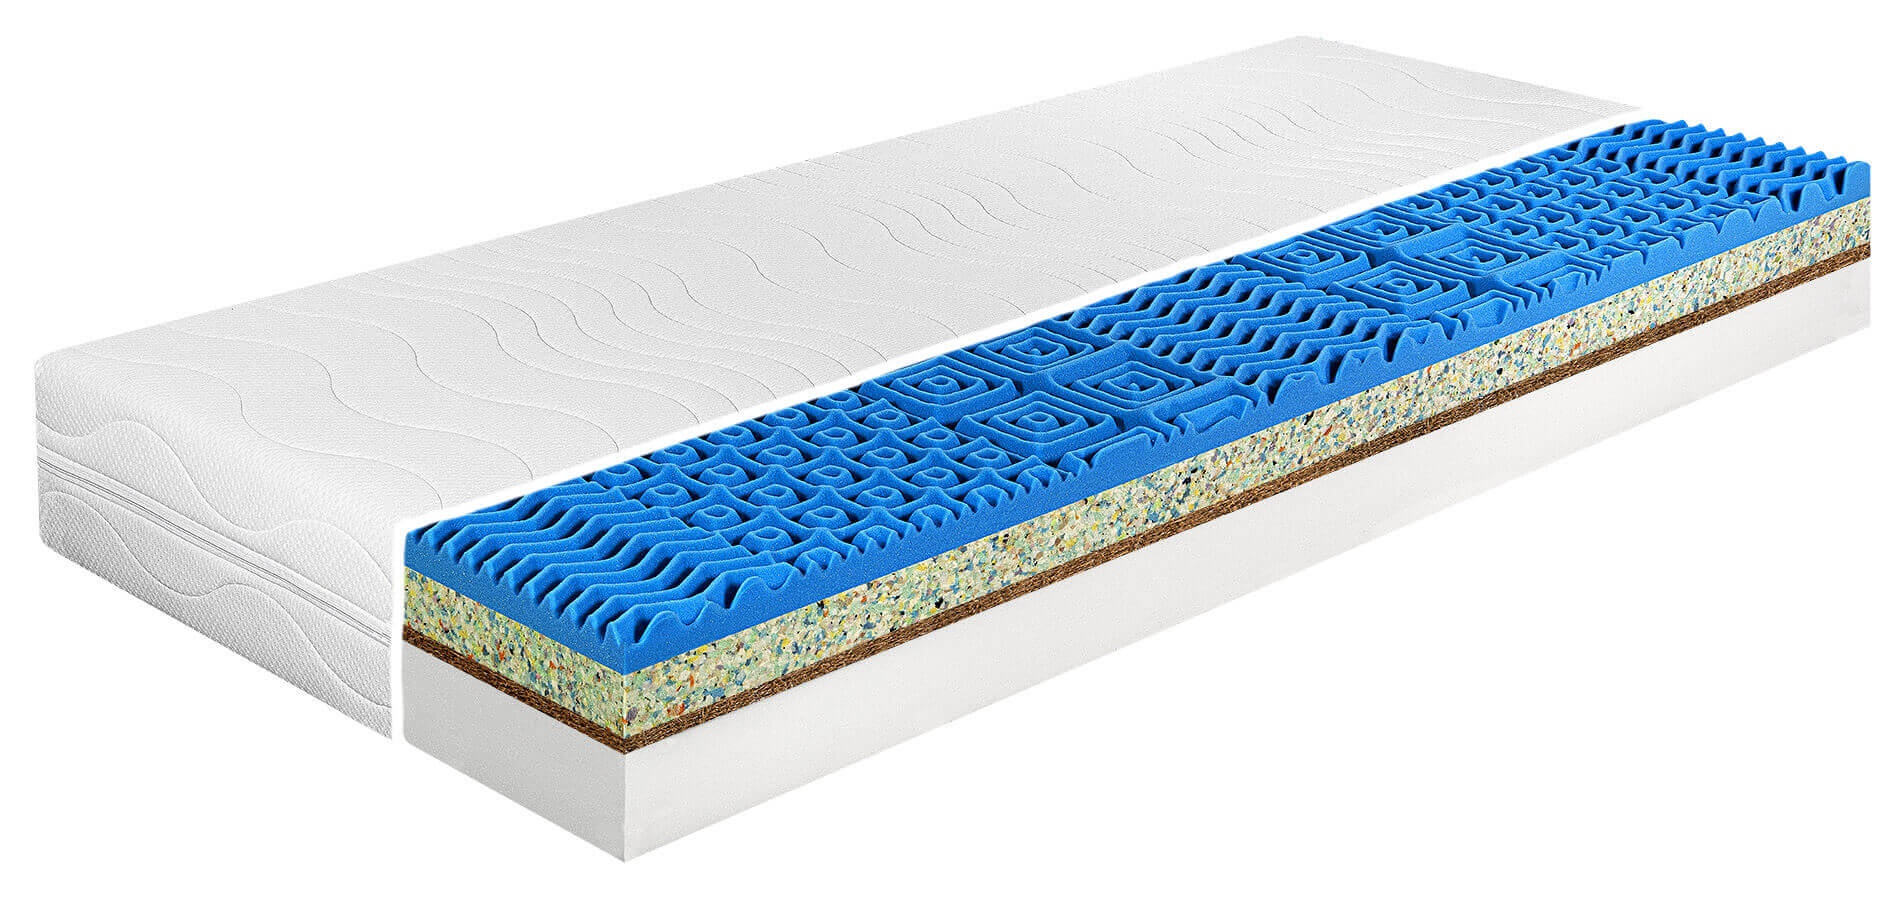 Sendvičová matrace ZEUS PLUS, výška 22 cm Rozměr: 80 x 195 cm, Materiál: chloe aktiv